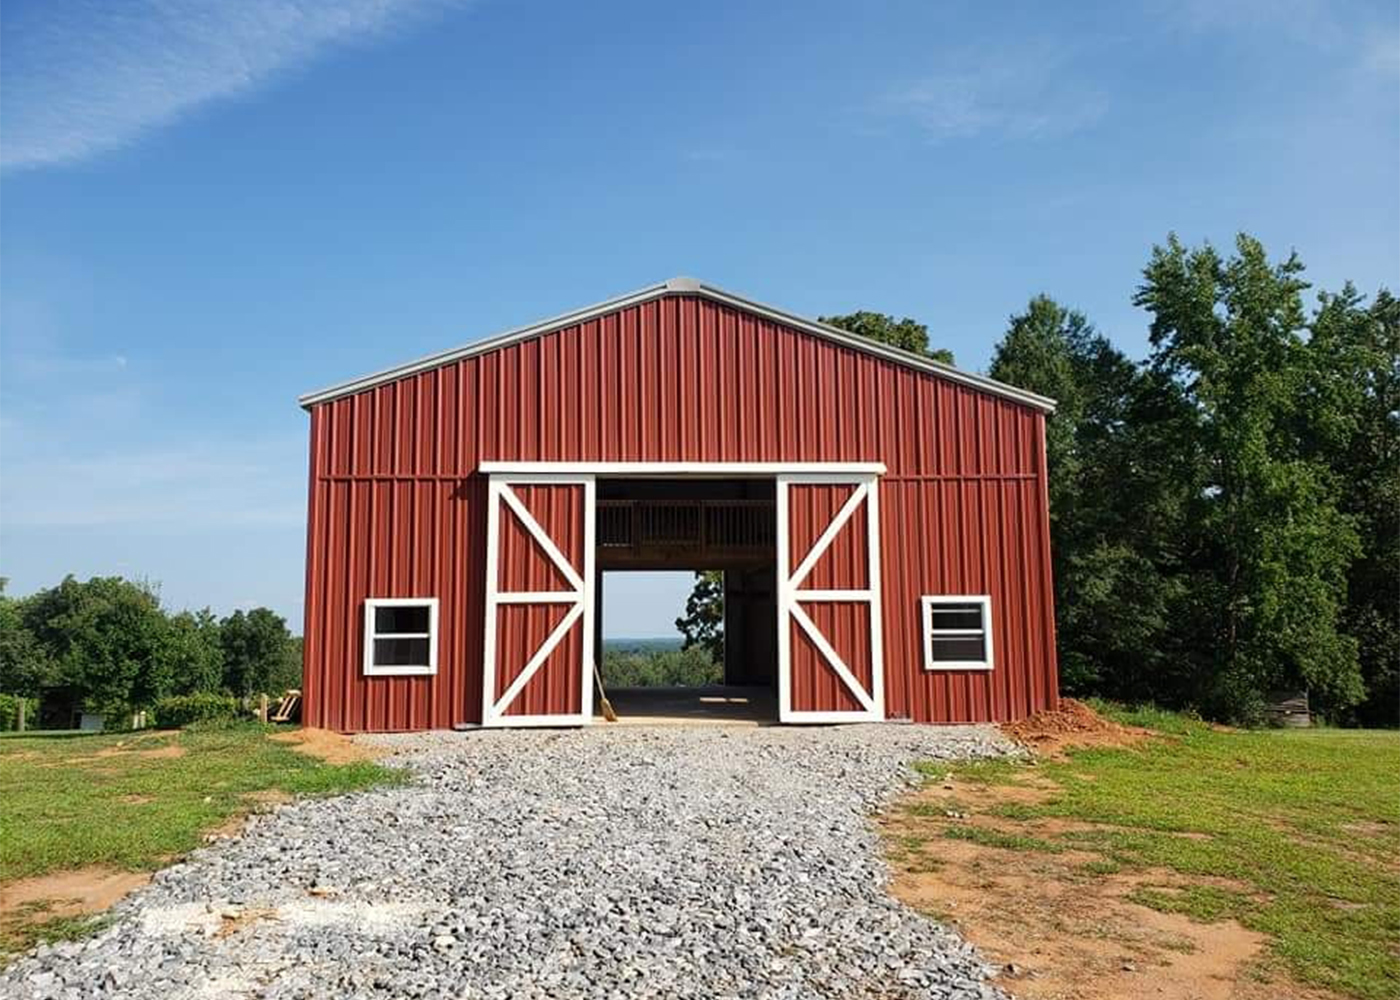 Capital Steel Barn with Sliding Doors